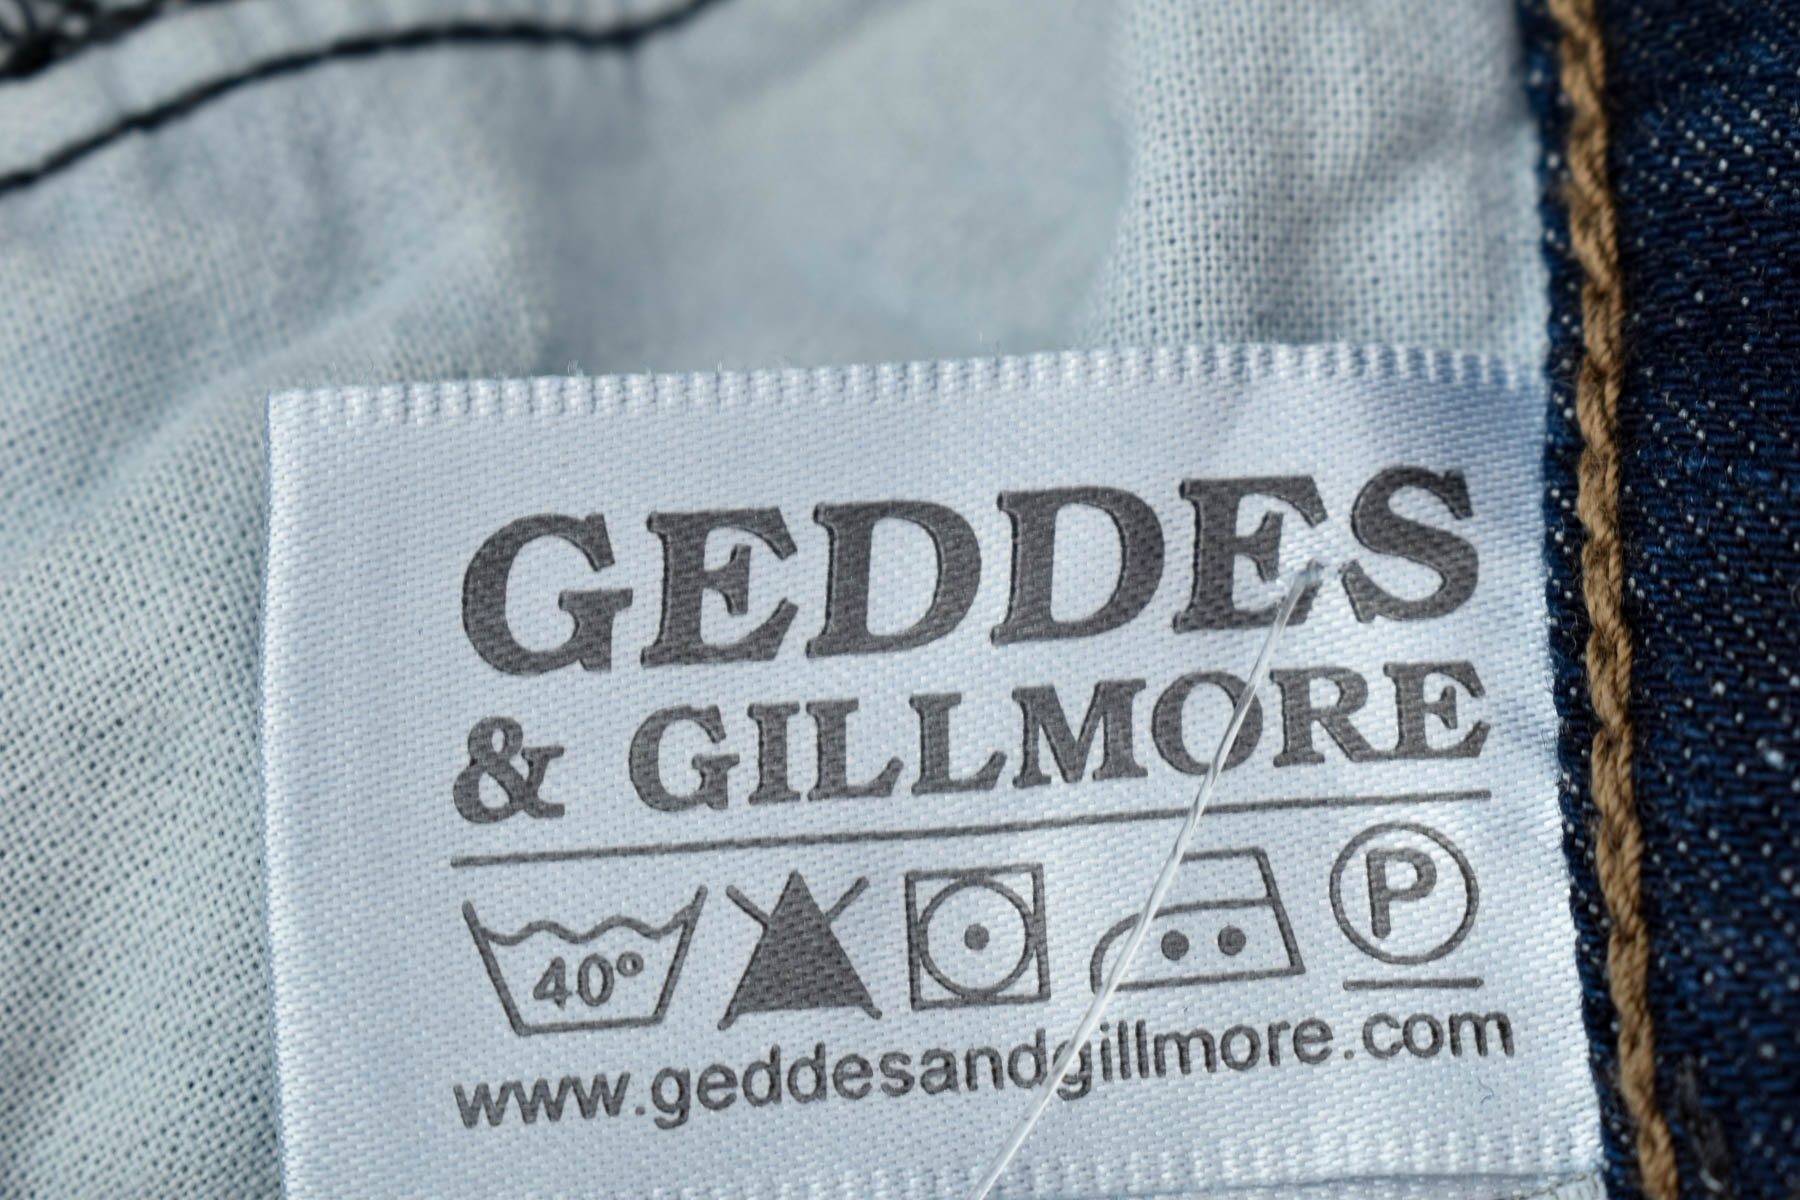 Denim skirt - GEDDES & GILLMORE - 2